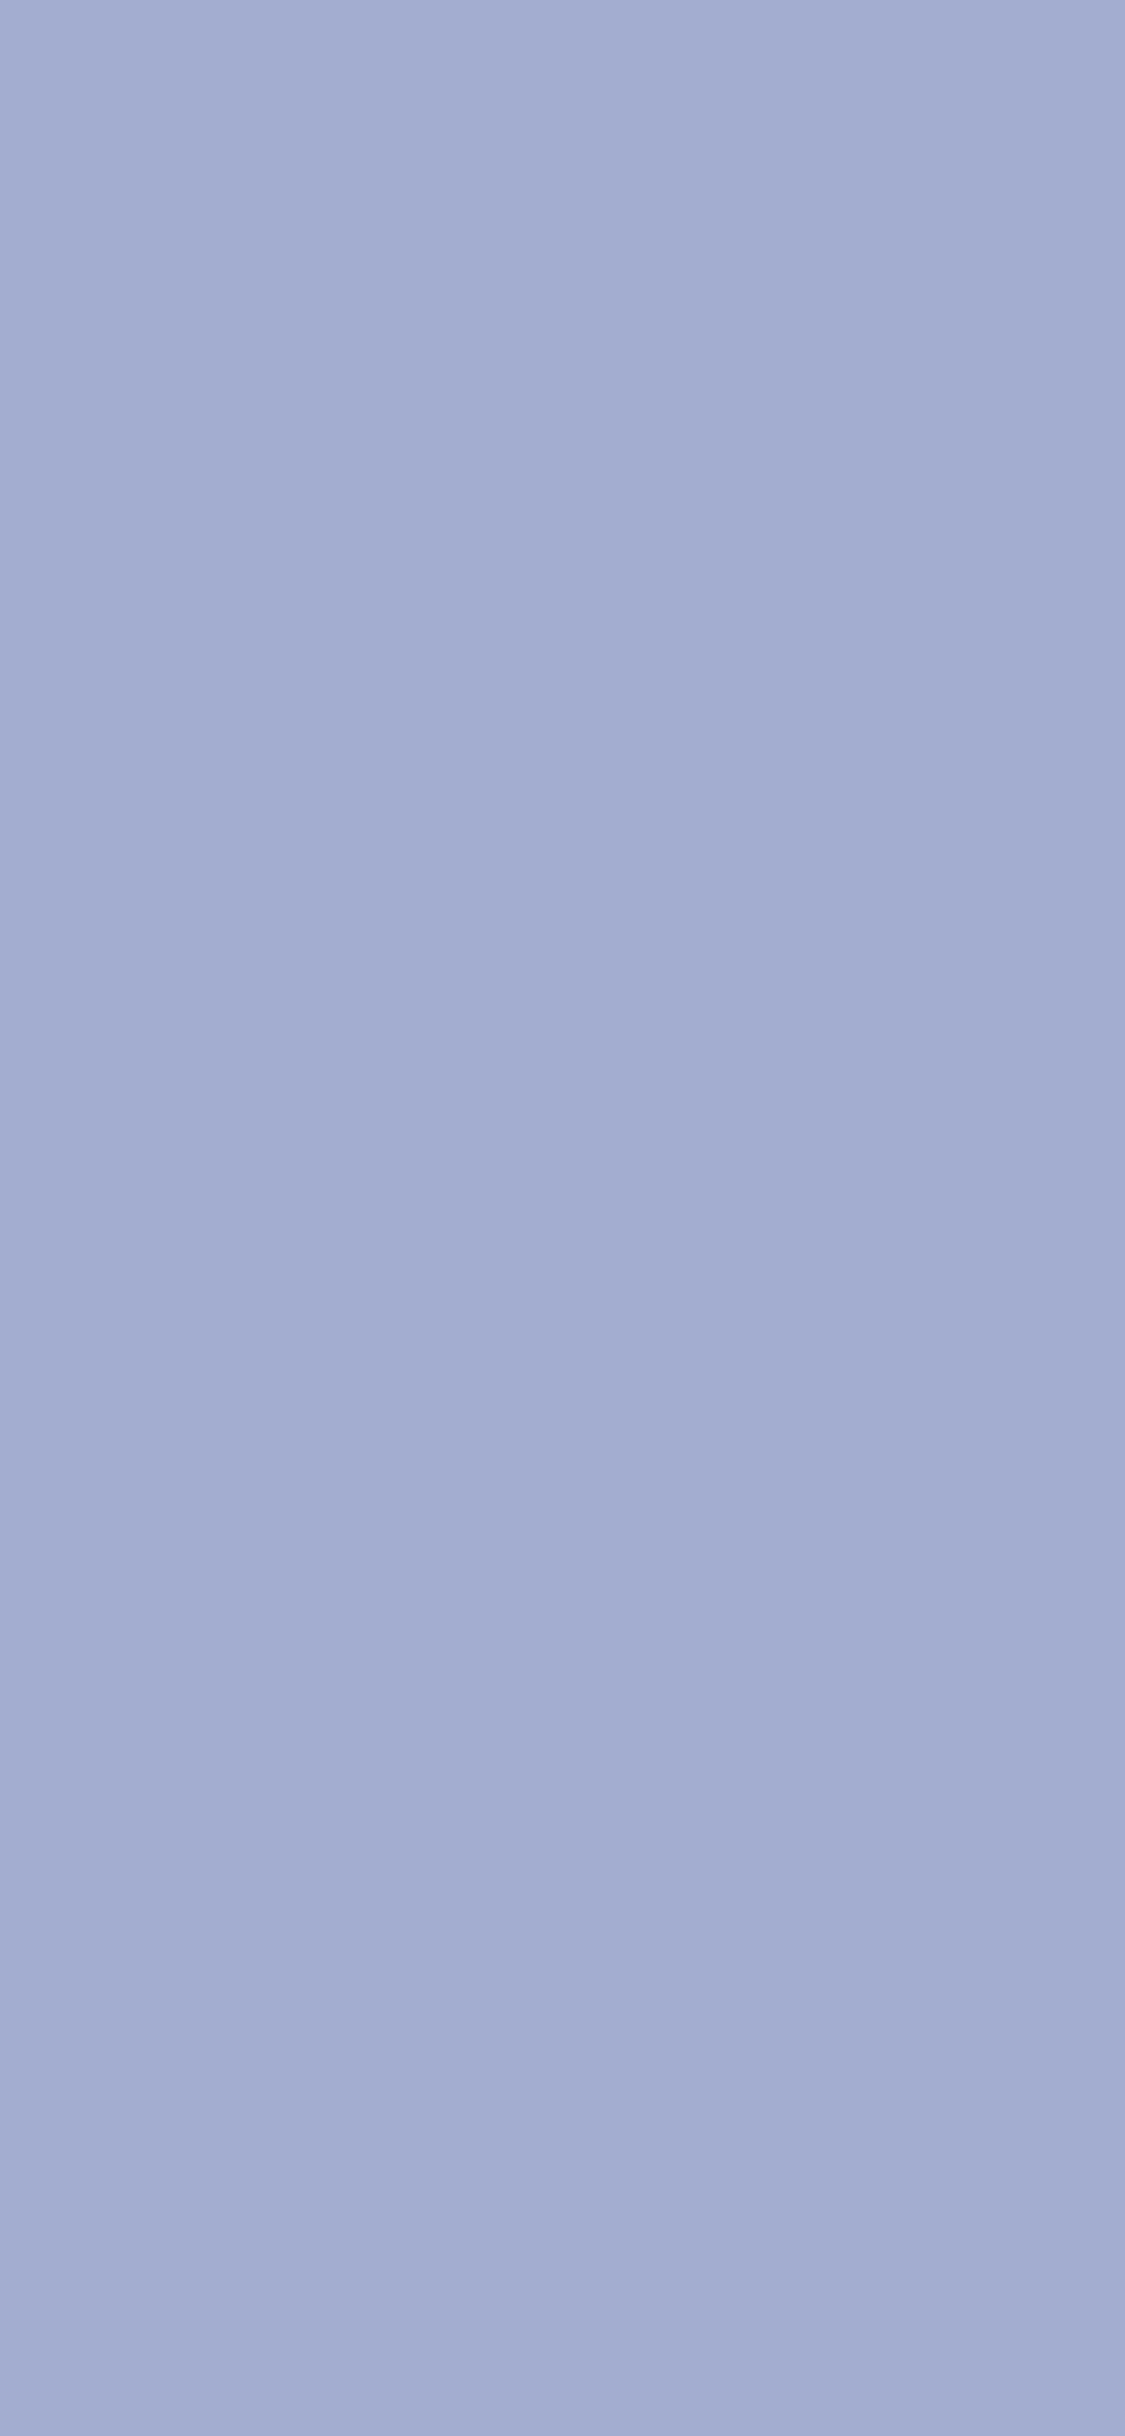 1125x2436 Wild Blue Yonder Solid Color Background